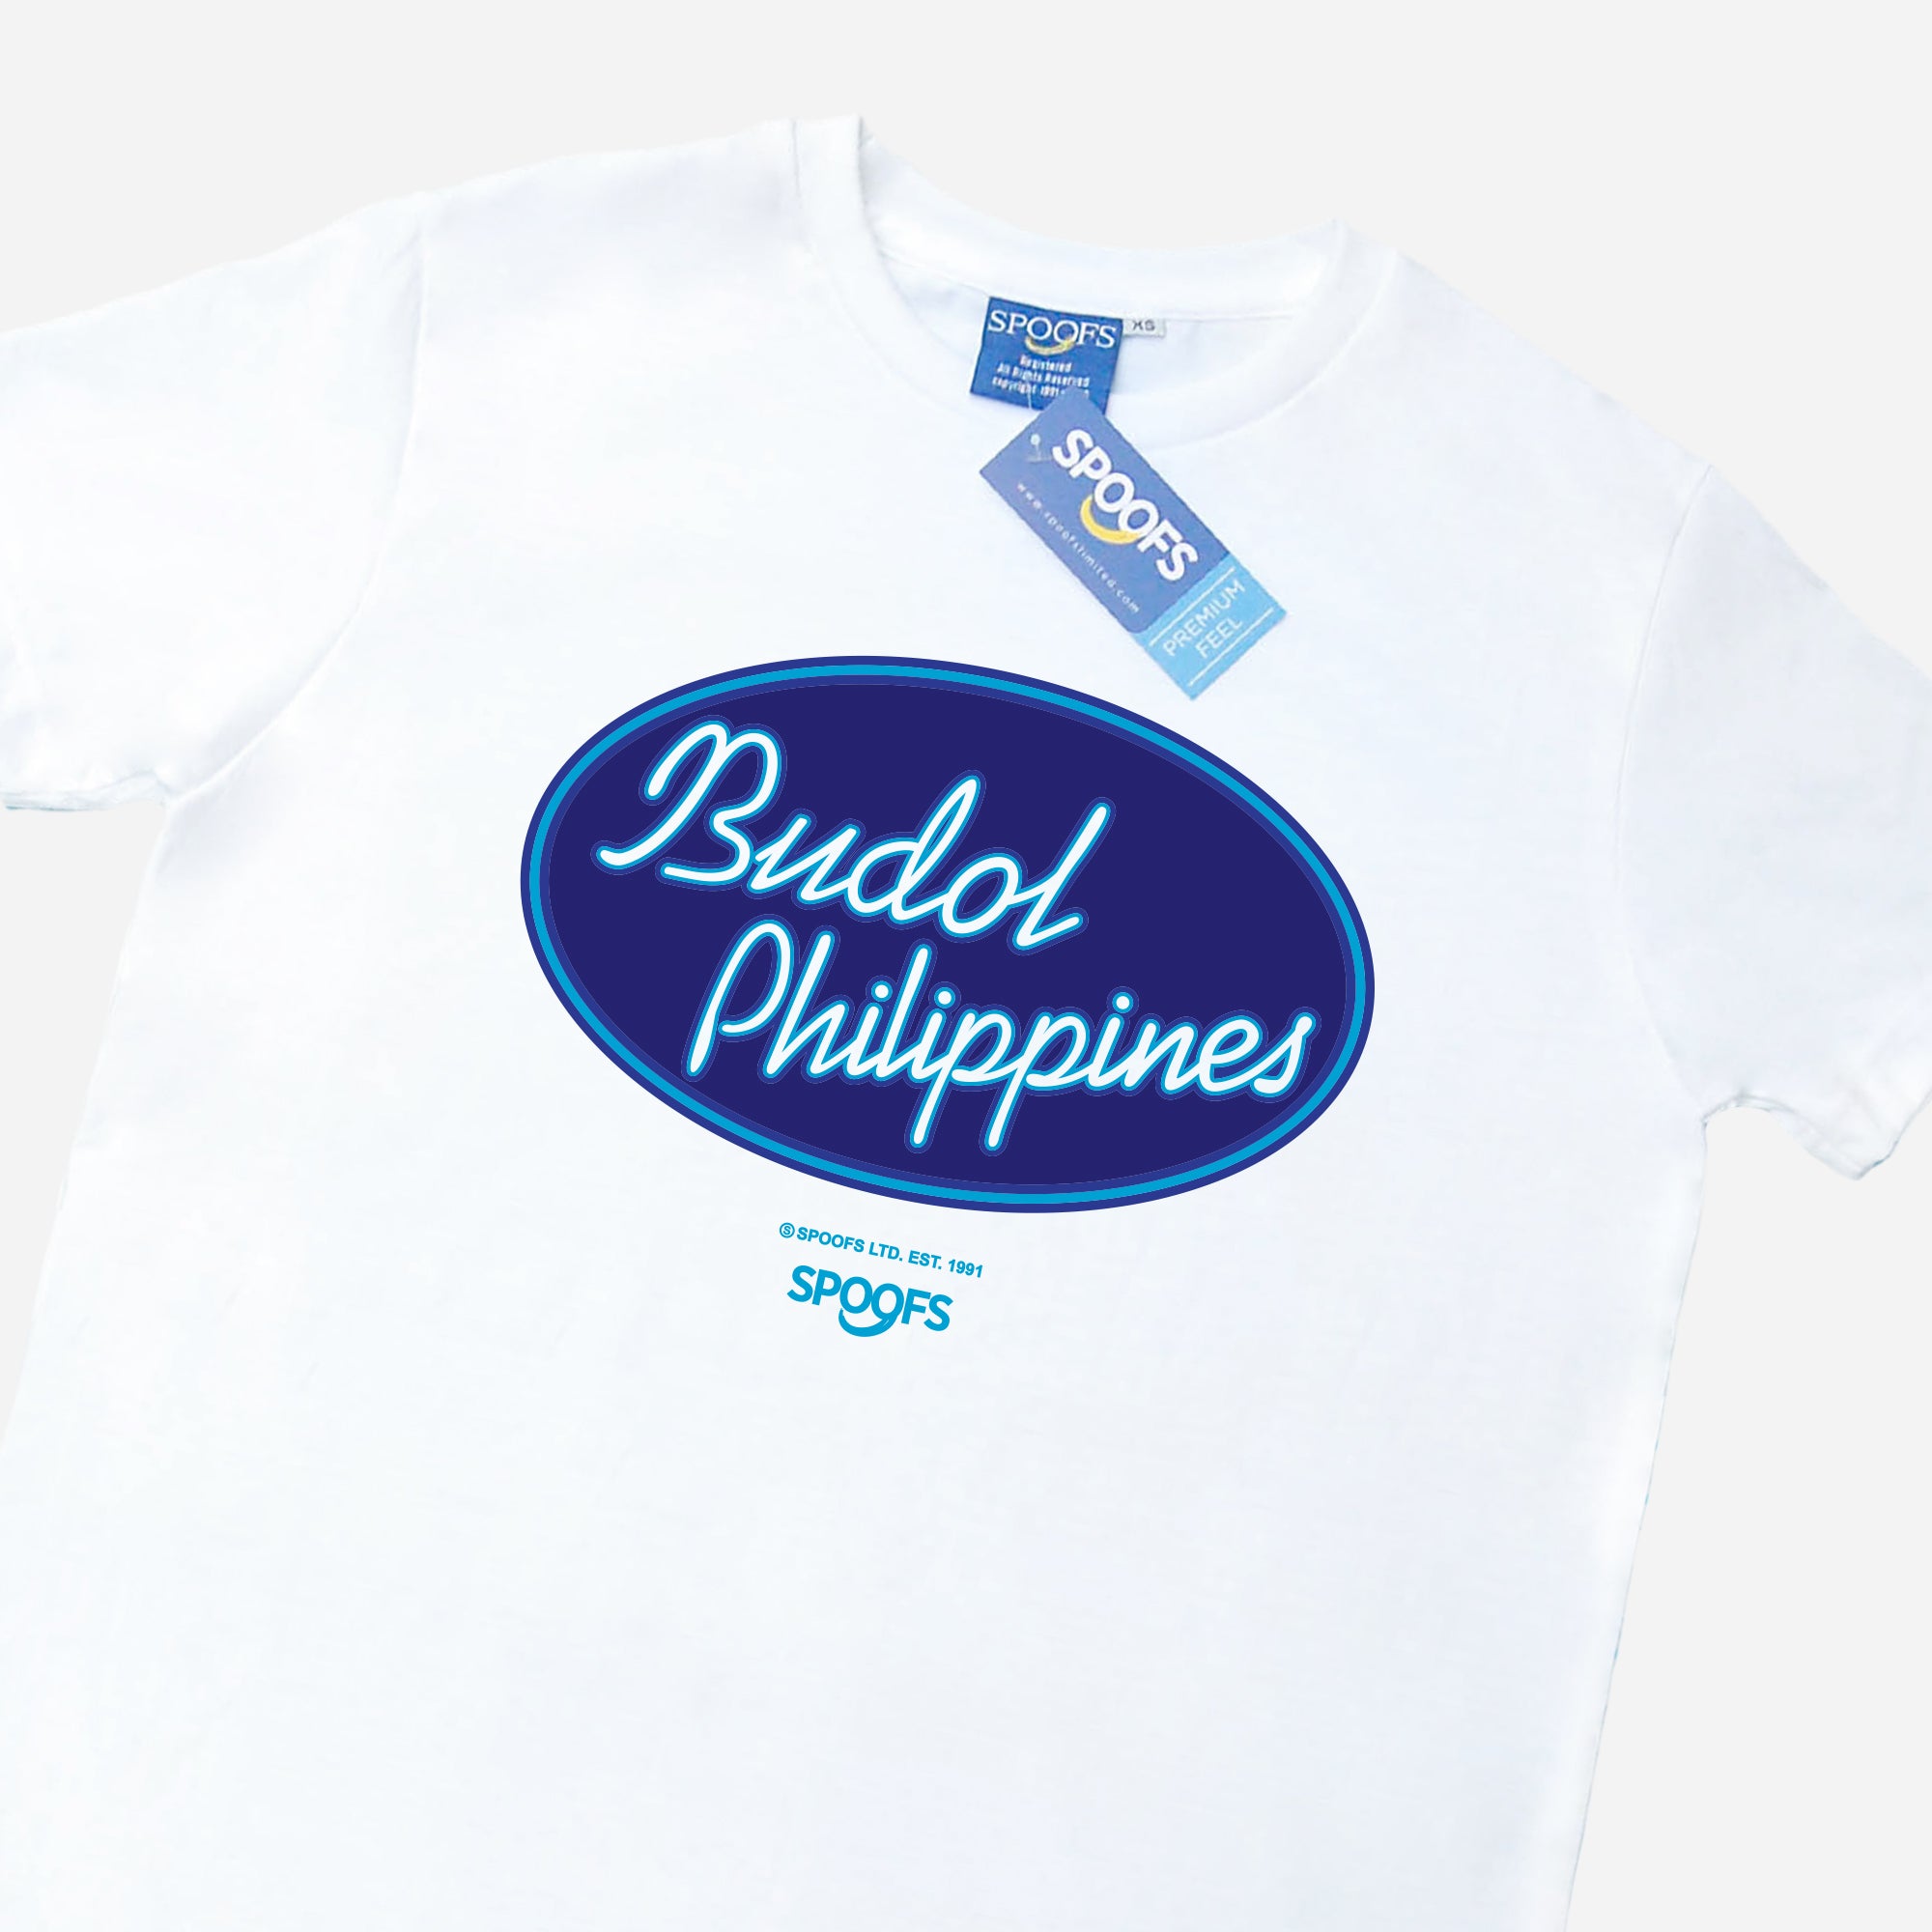 Budol Philippines (White)